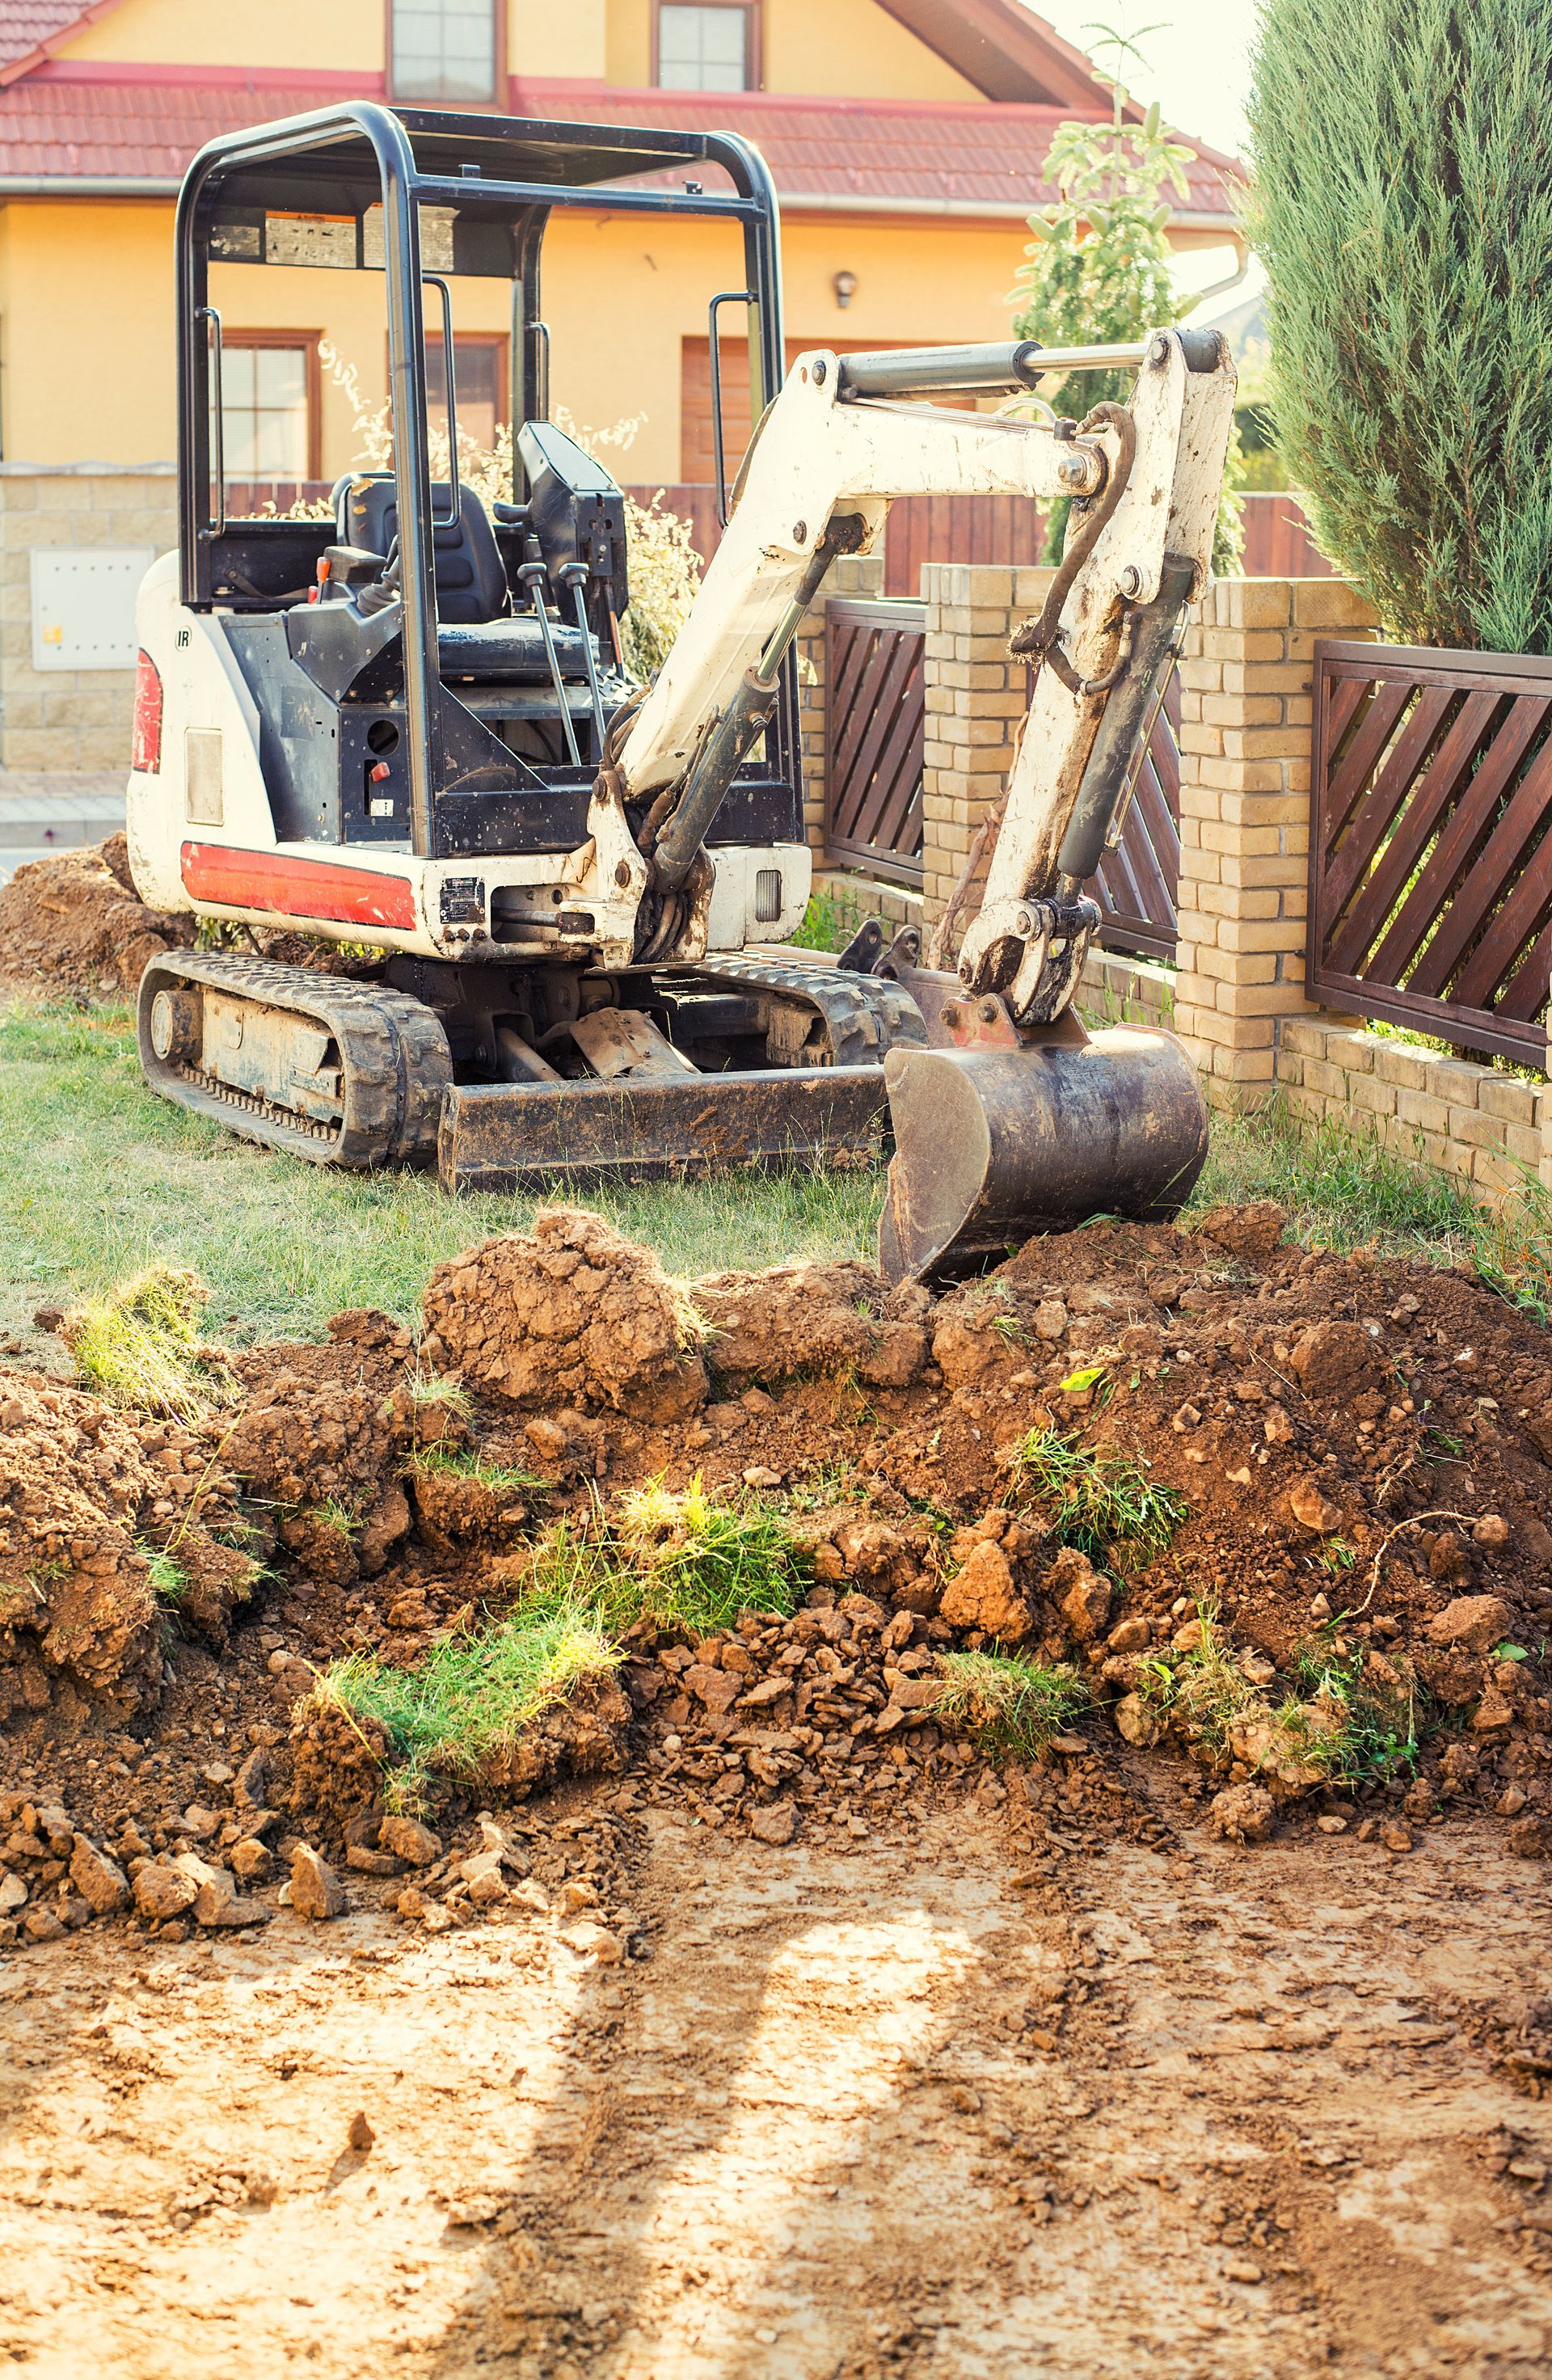 Excavator regulates the terrain around the house